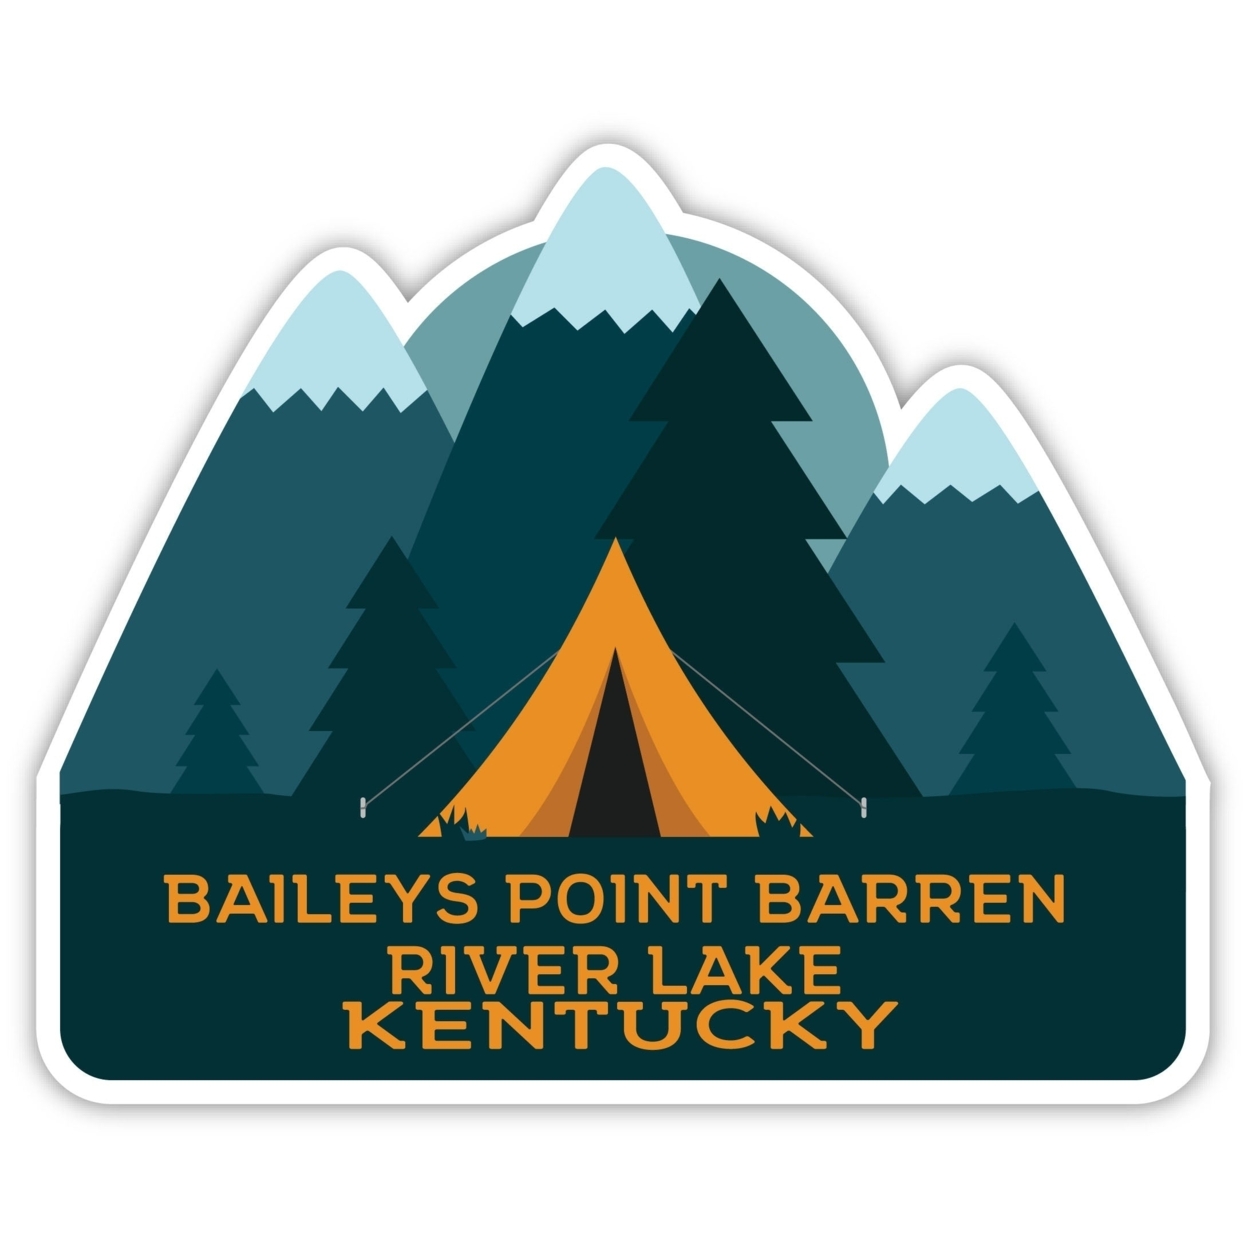 Baileys Point Barren River Lake Kentucky Souvenir Decorative Stickers (Choose Theme And Size) - Single Unit, 2-Inch, Tent